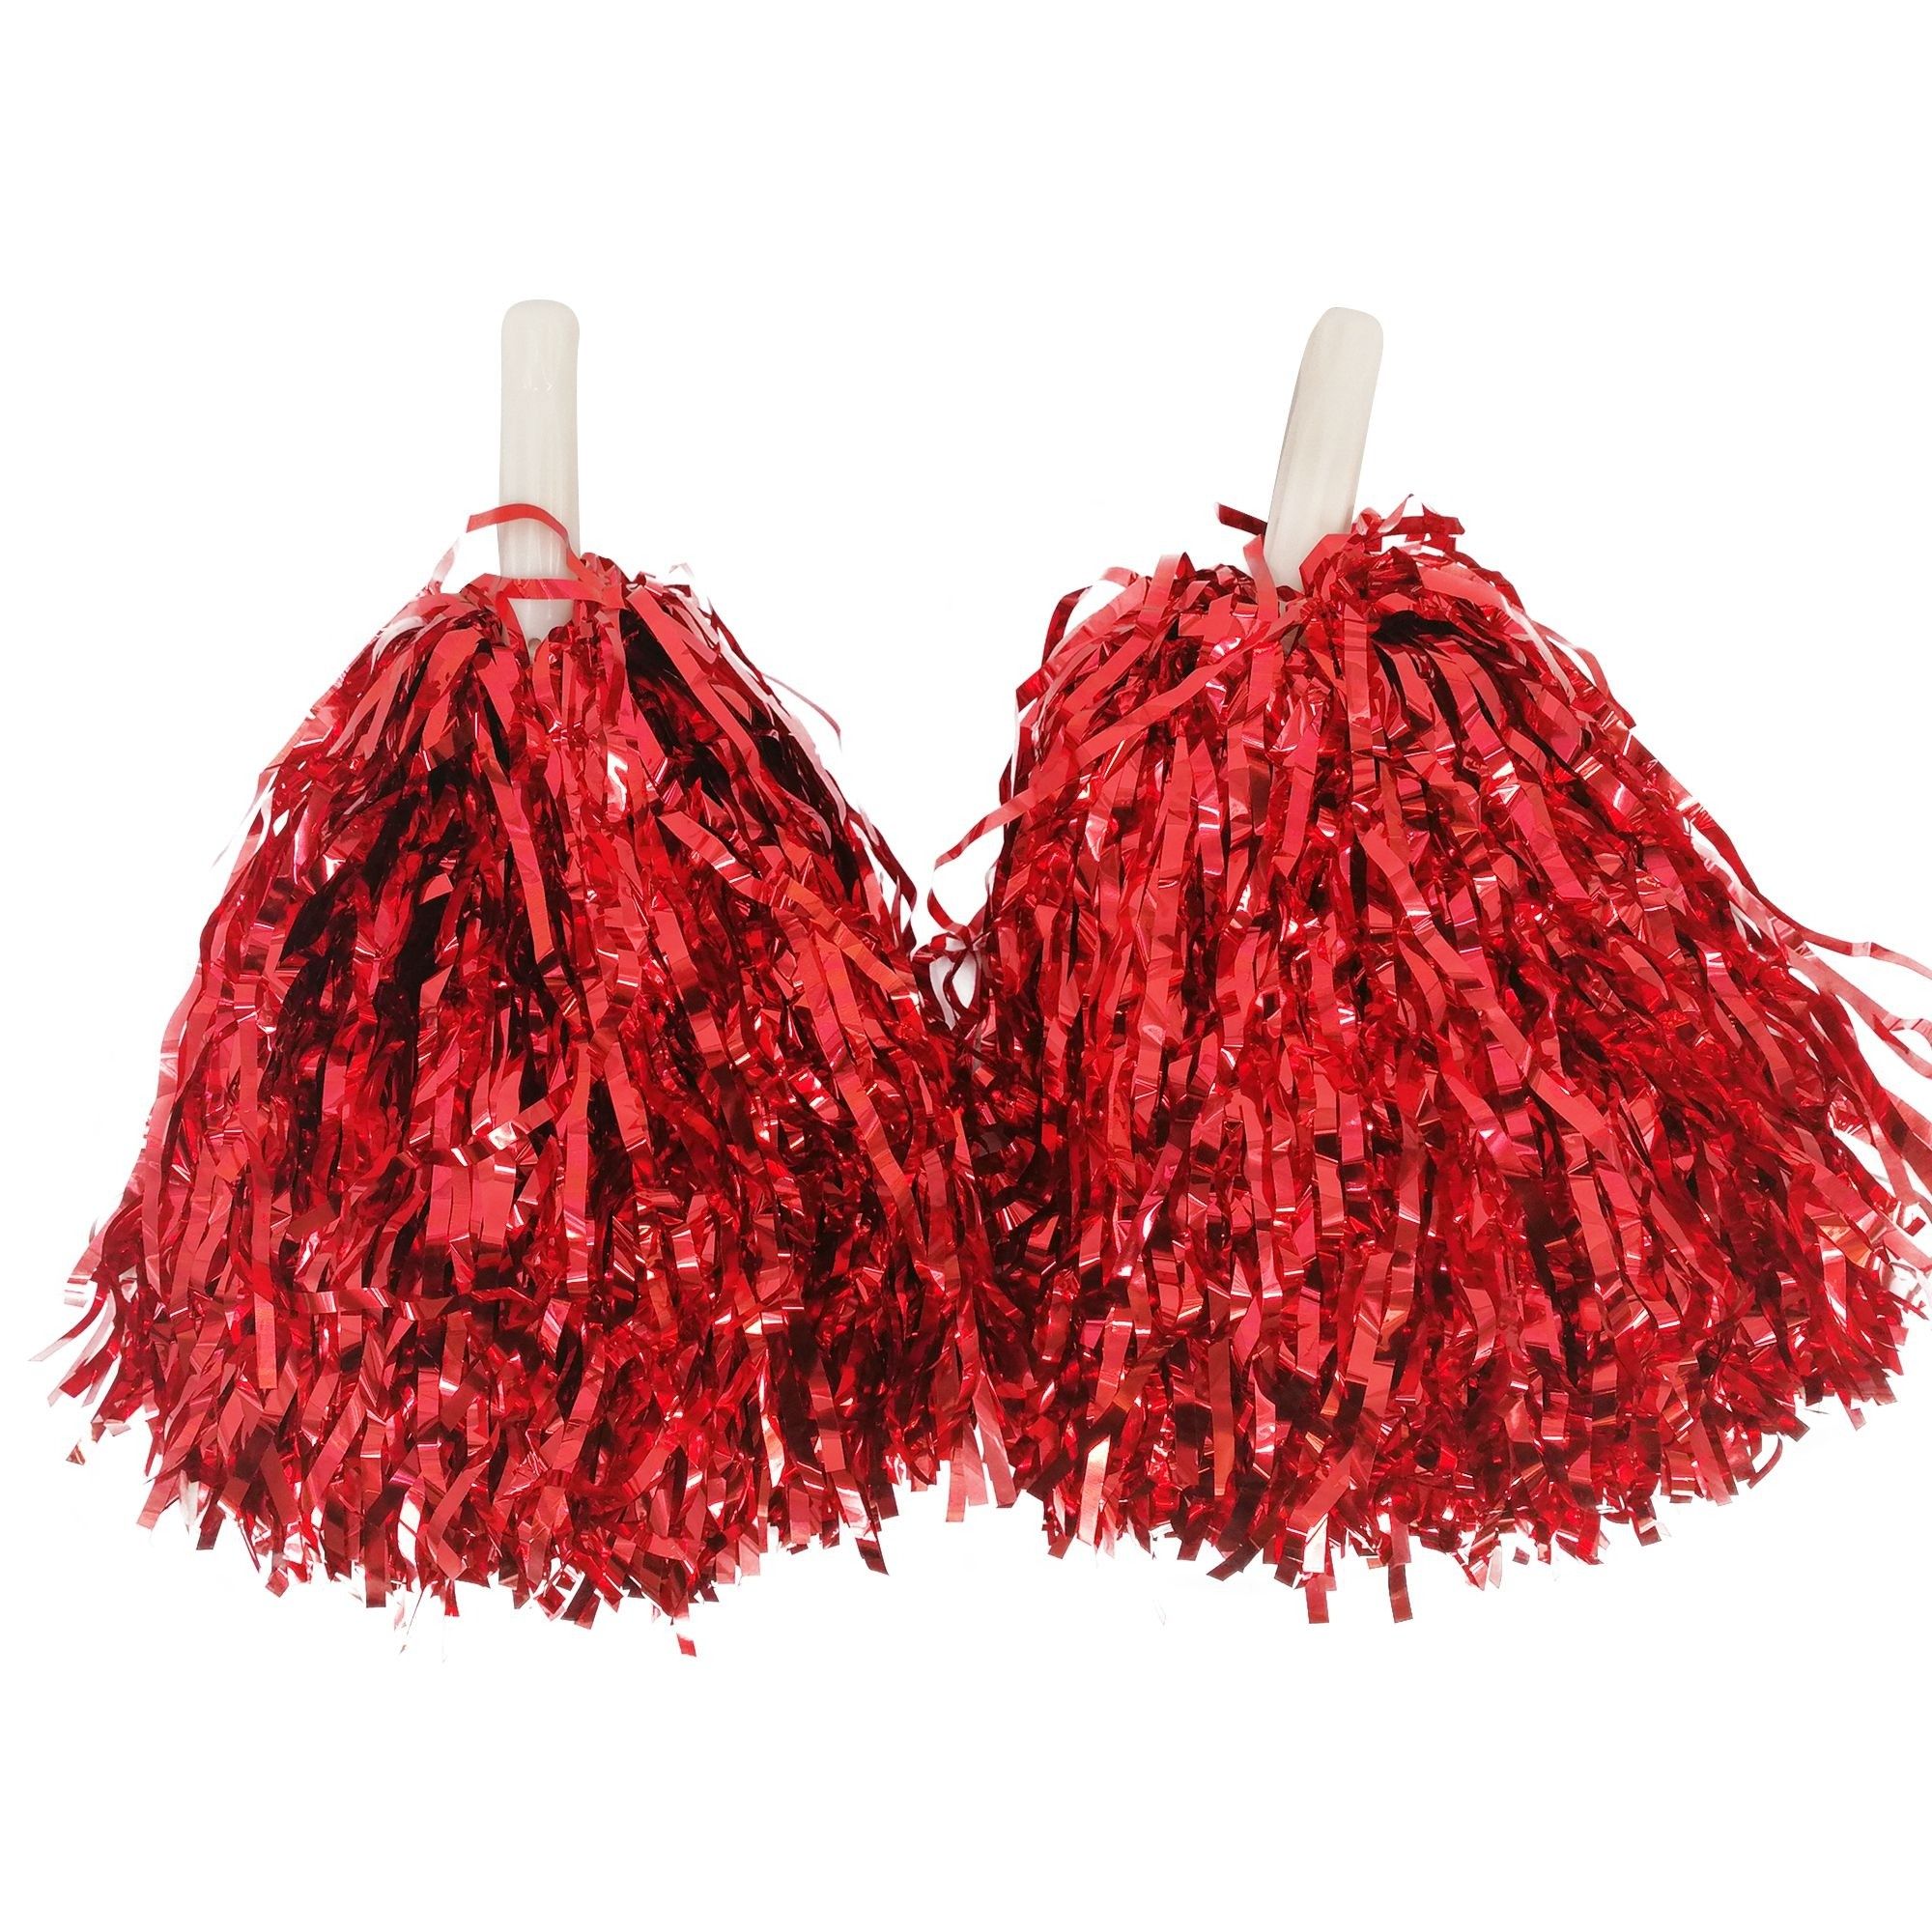 Red Pom Poms, Red Pom-Poms, Red Cheerleading Pom Poms